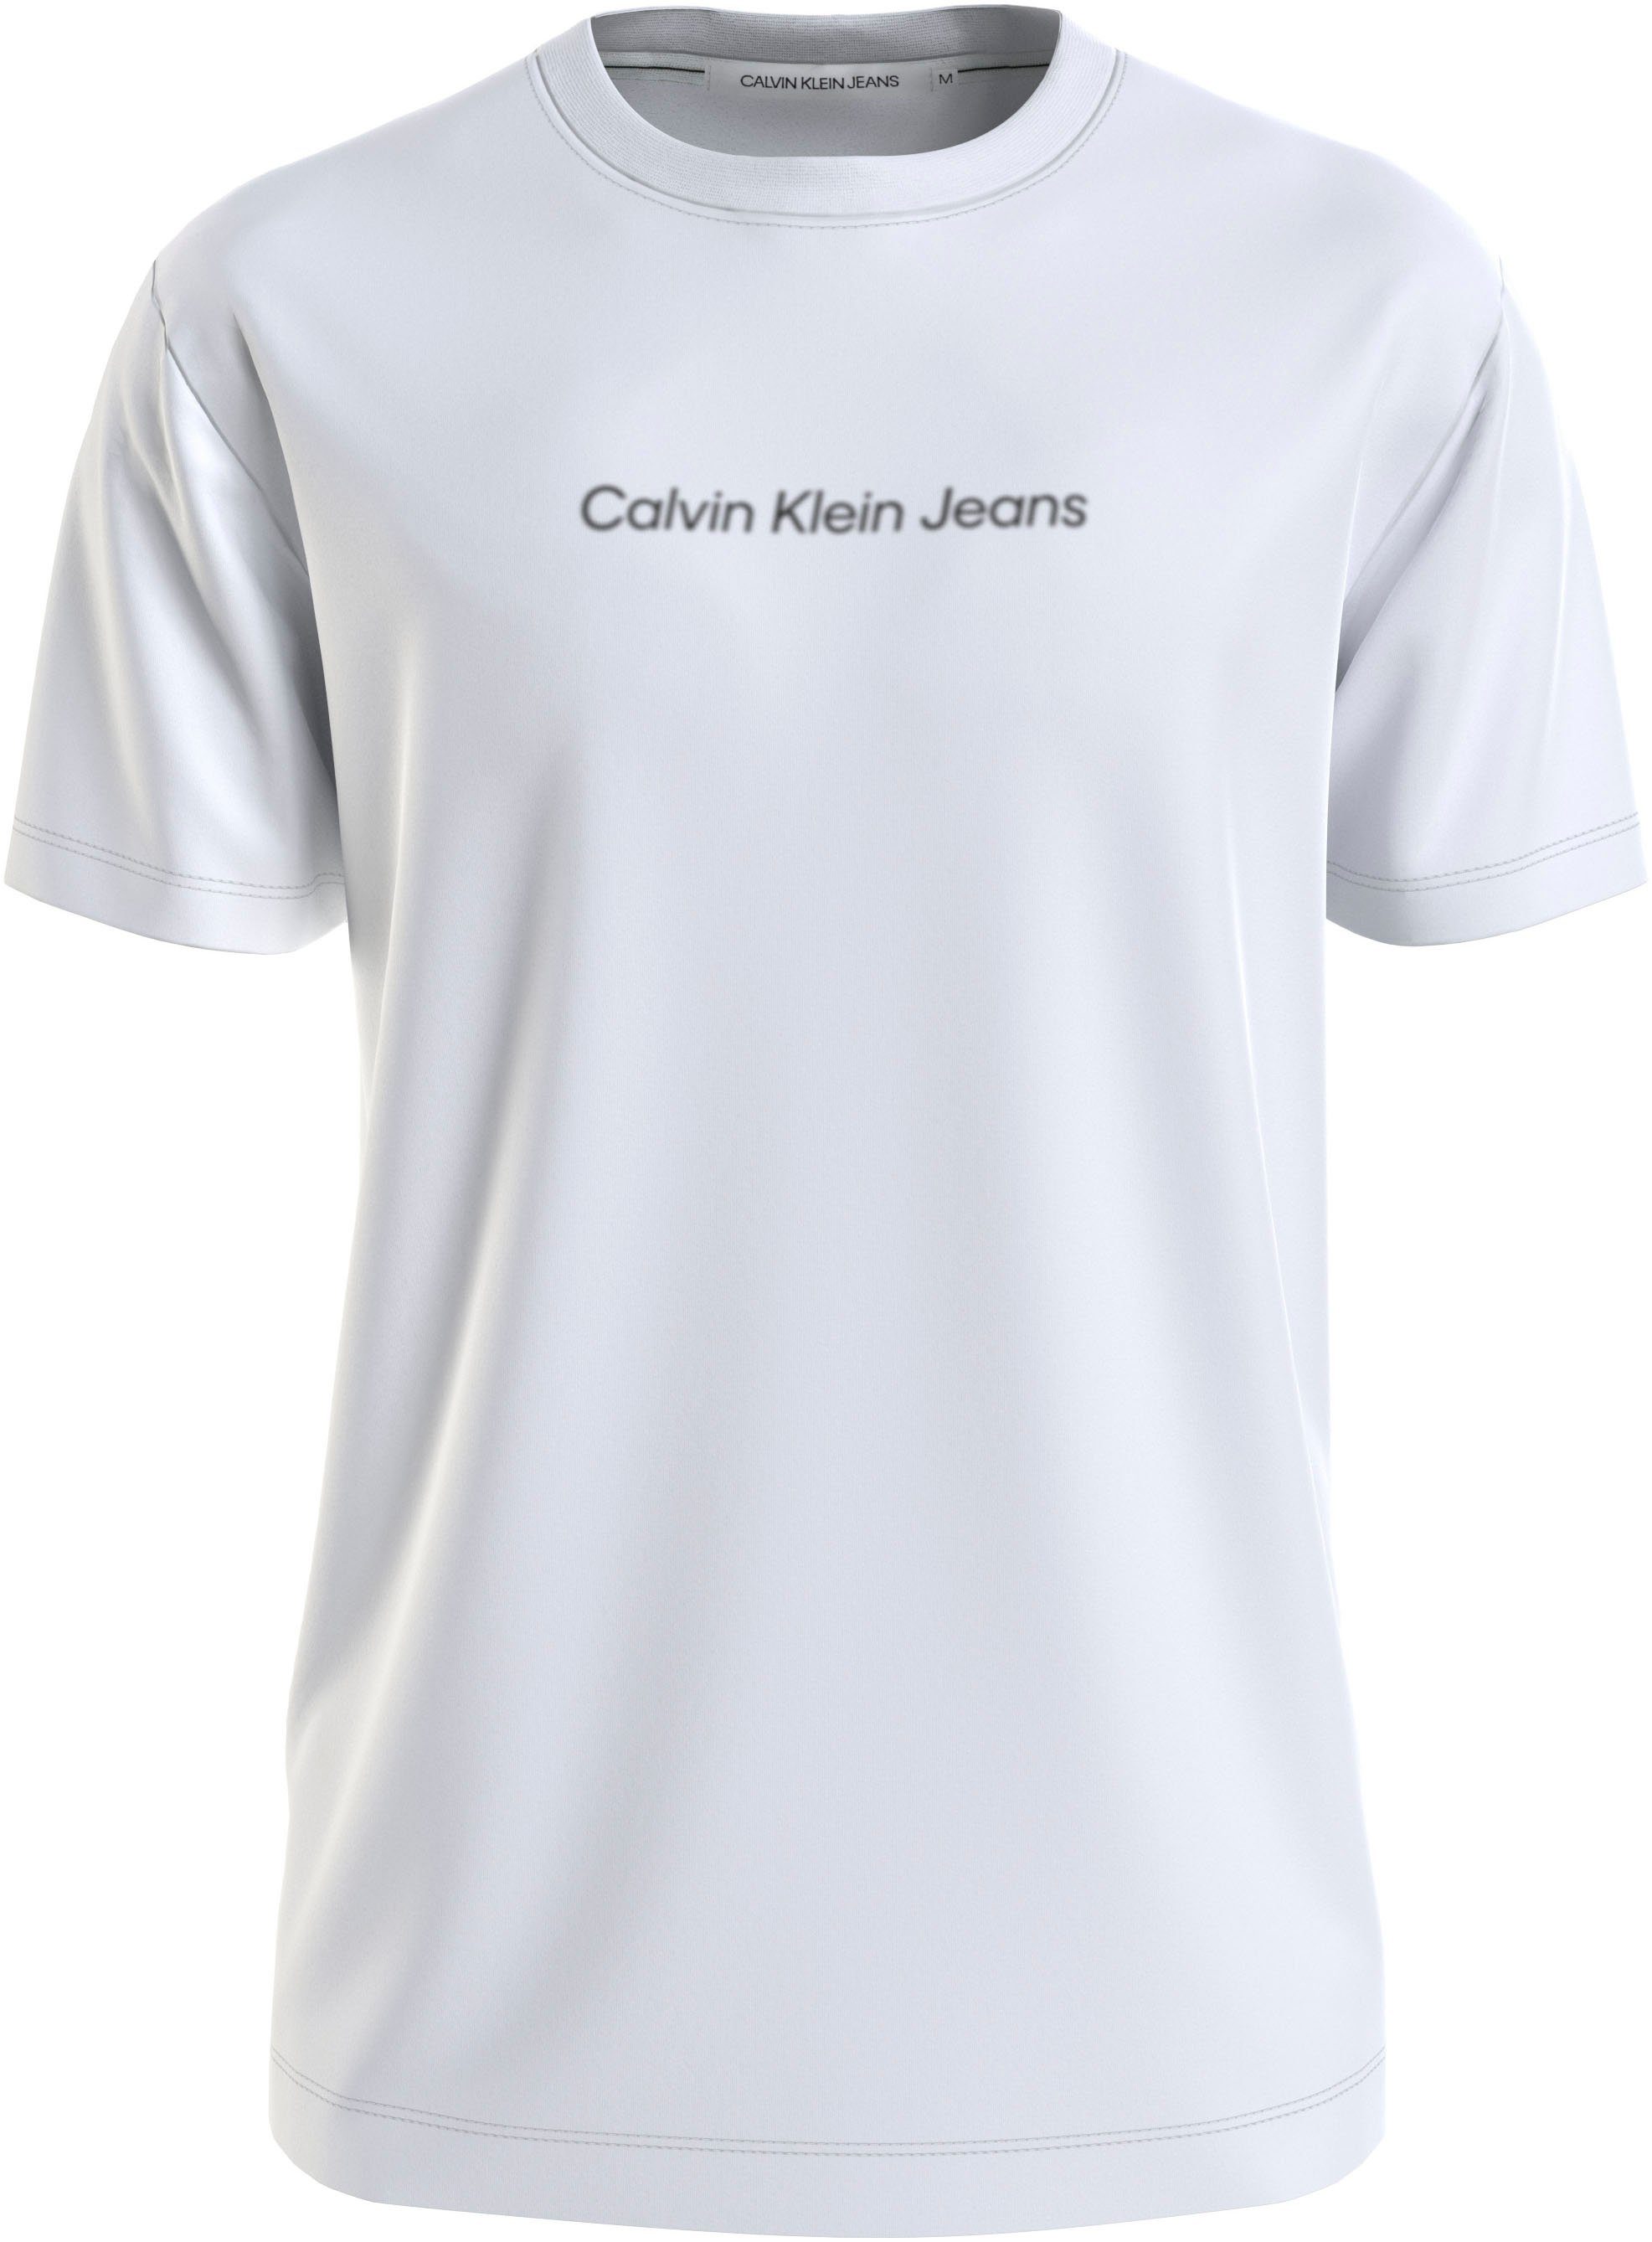 T-Shirt Calvin LOGO CK TEE Jeans Klein White MIRRORED Bright